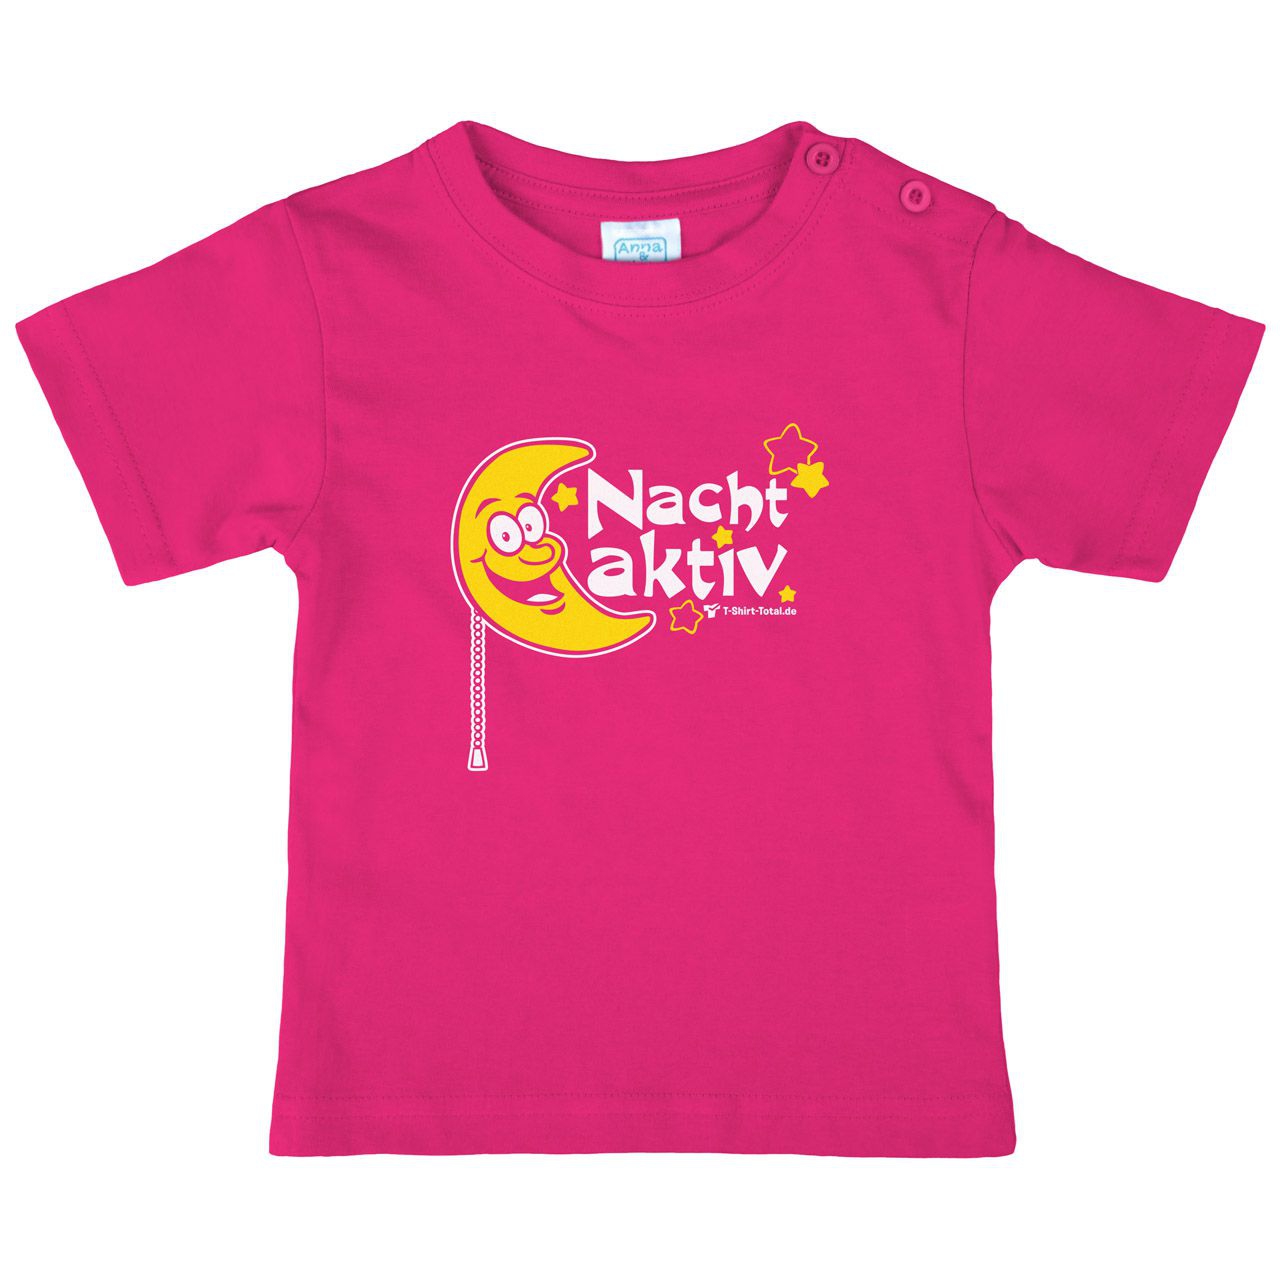 Nachtaktiv Mond Kinder T-Shirt pink 80 / 86